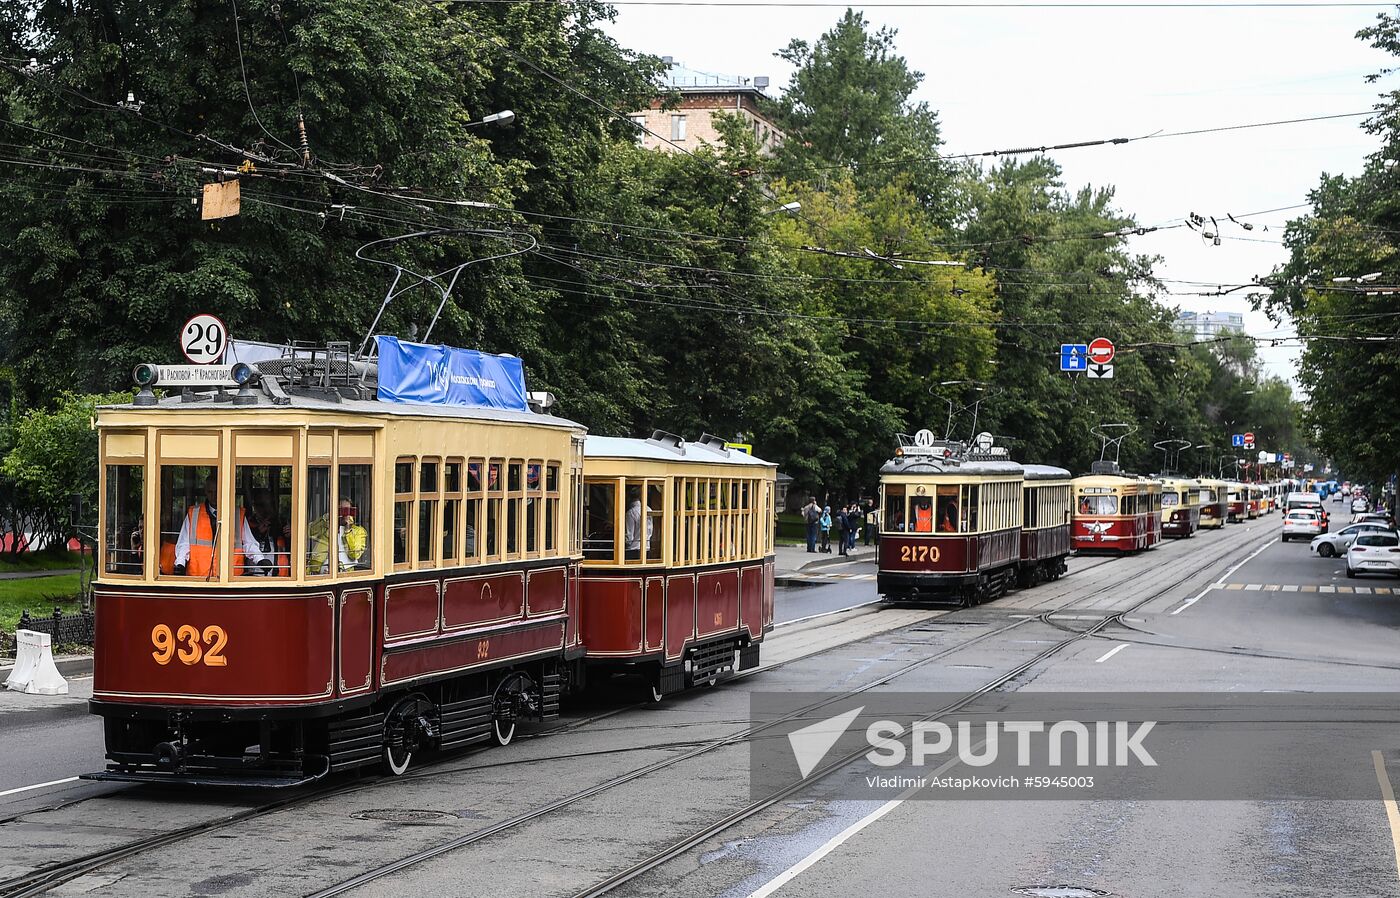 Russia Trams Parade